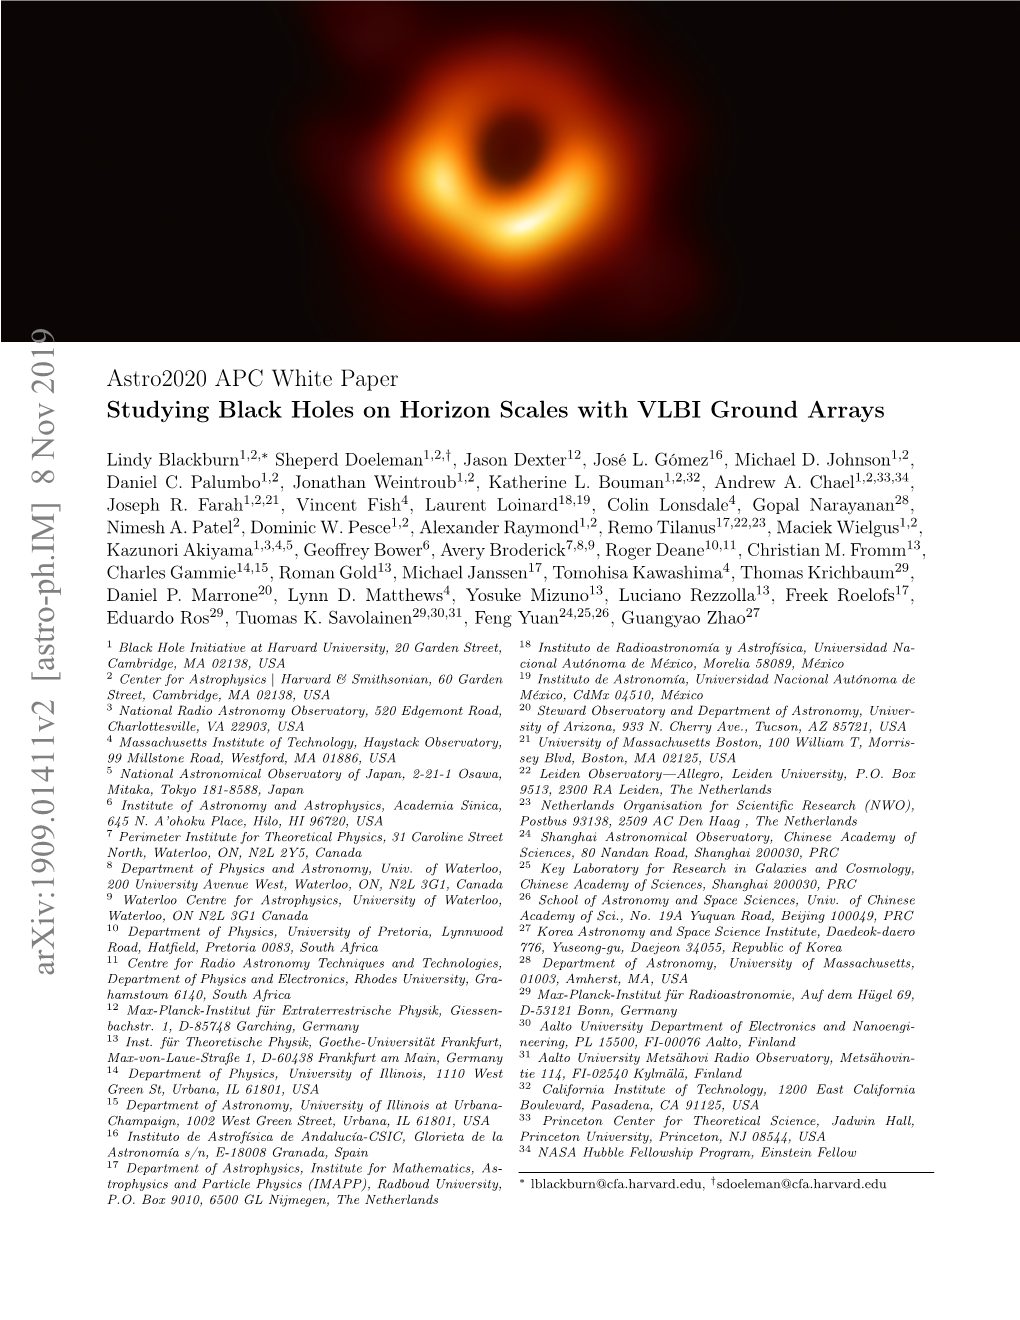 Studying Black Holes on Horizon Scales with VLBI Ground Arrays